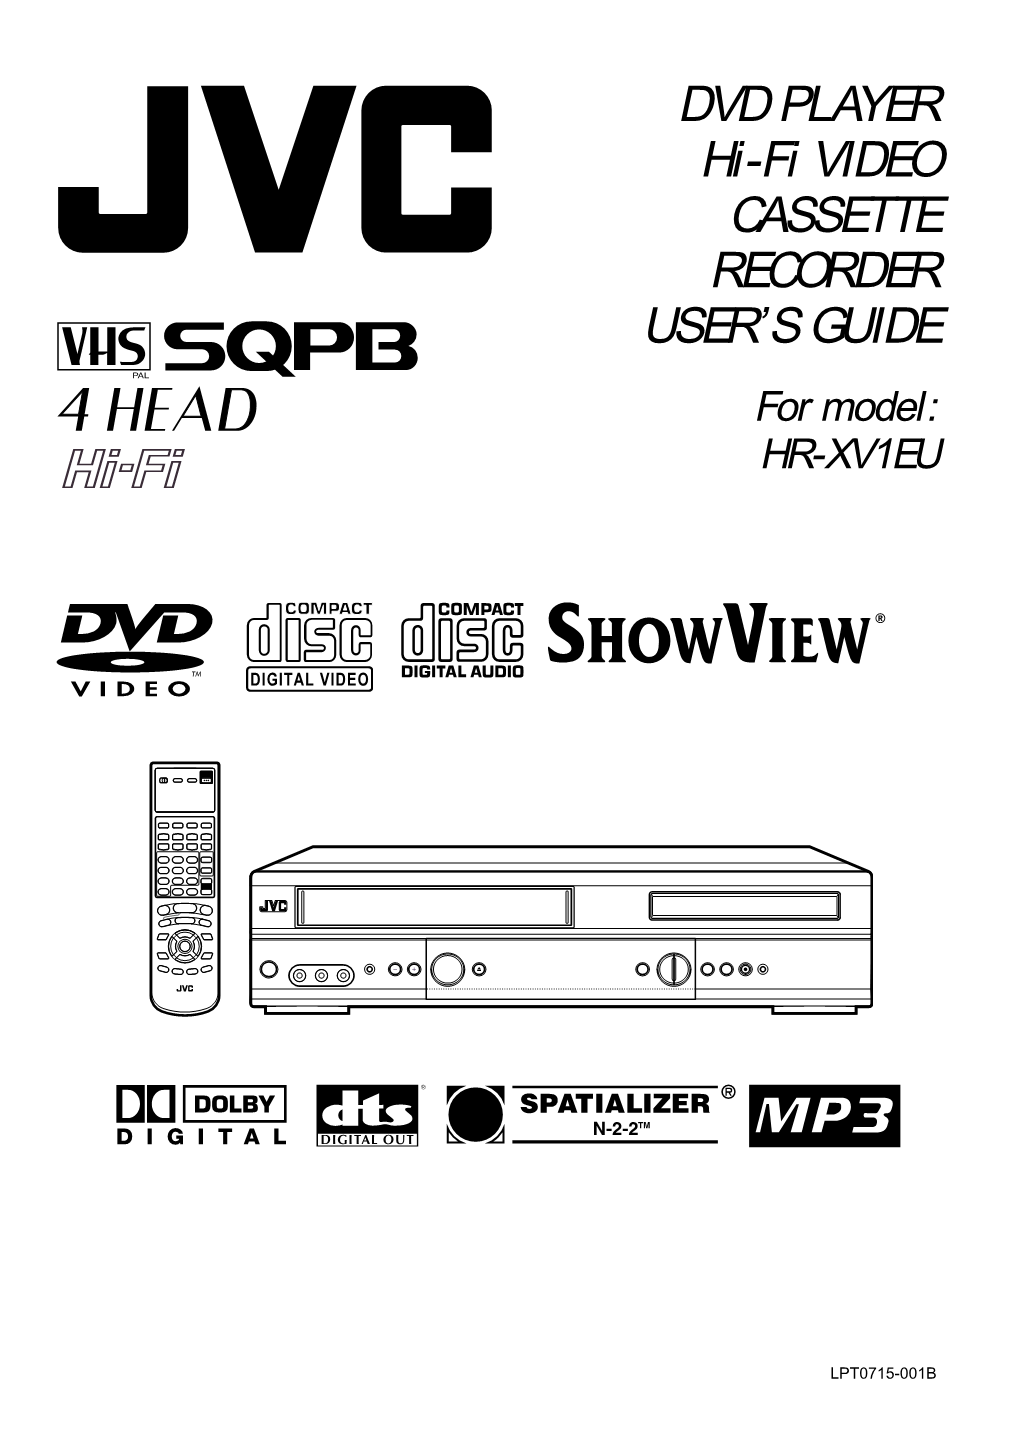 DVD PLAYER Hi-Fi VIDEO CASSETTE RECORDER USER's